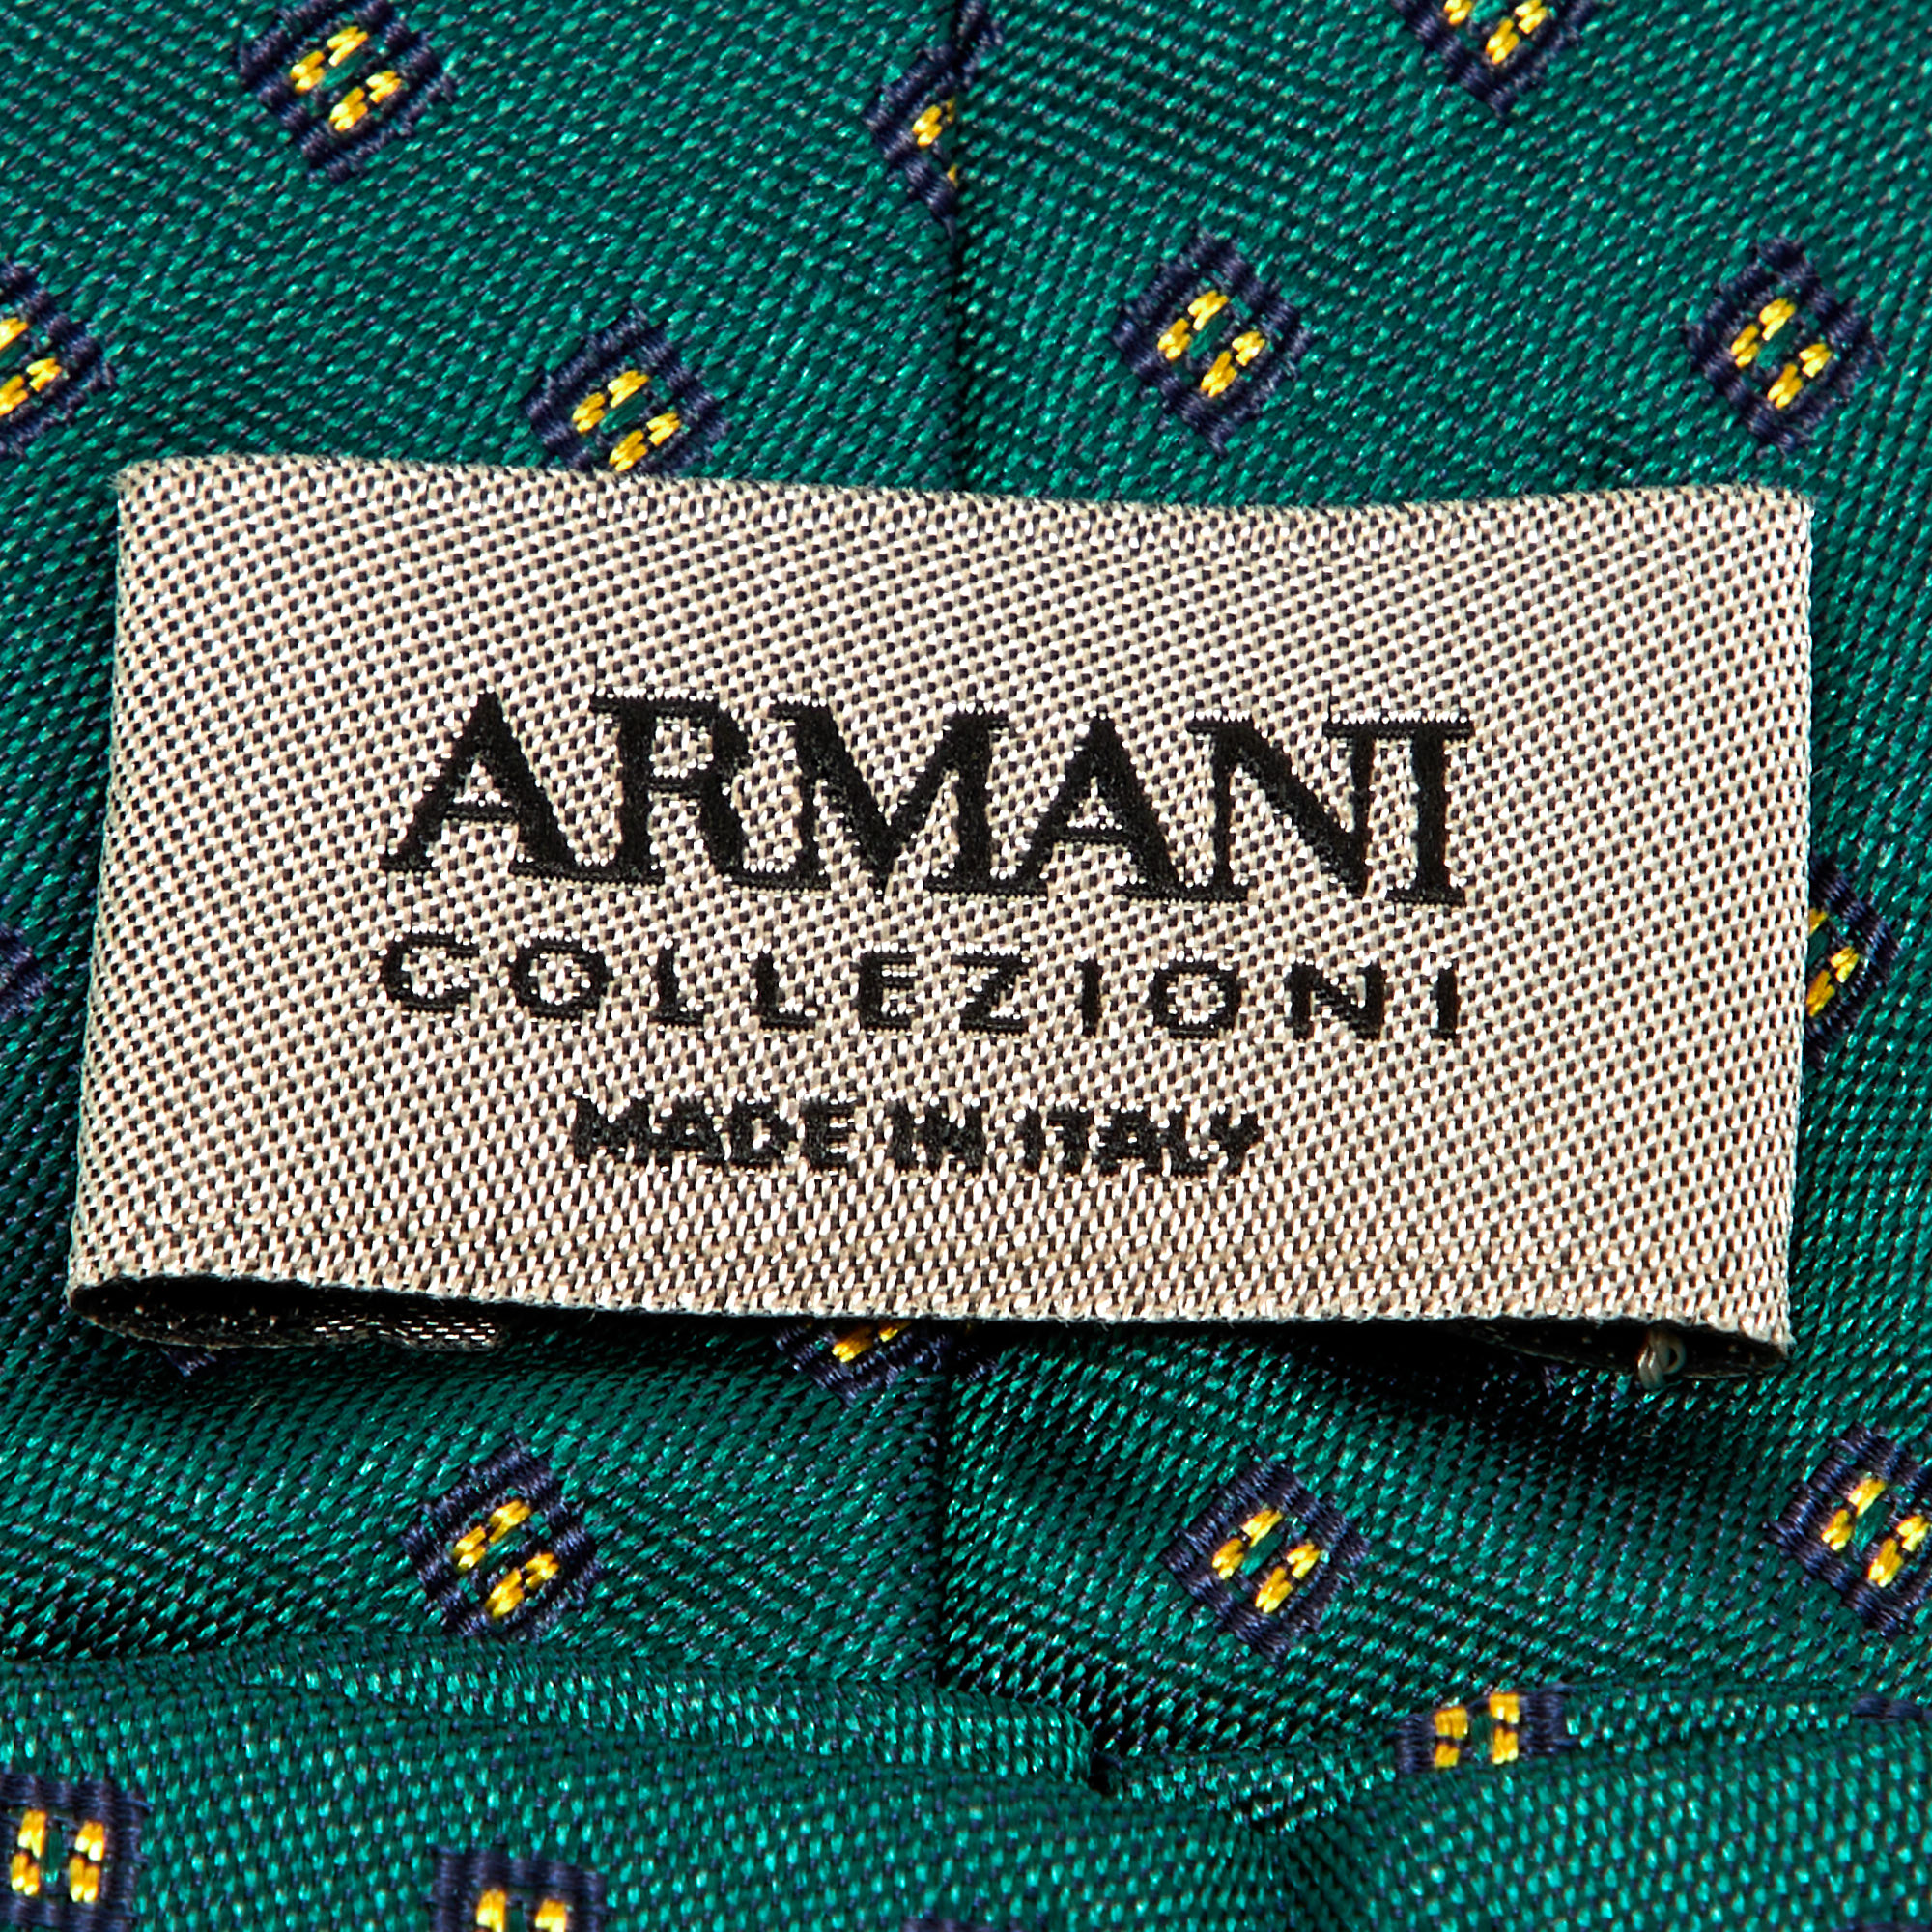 Armani Collezoni Green Jacquard Silk Tie